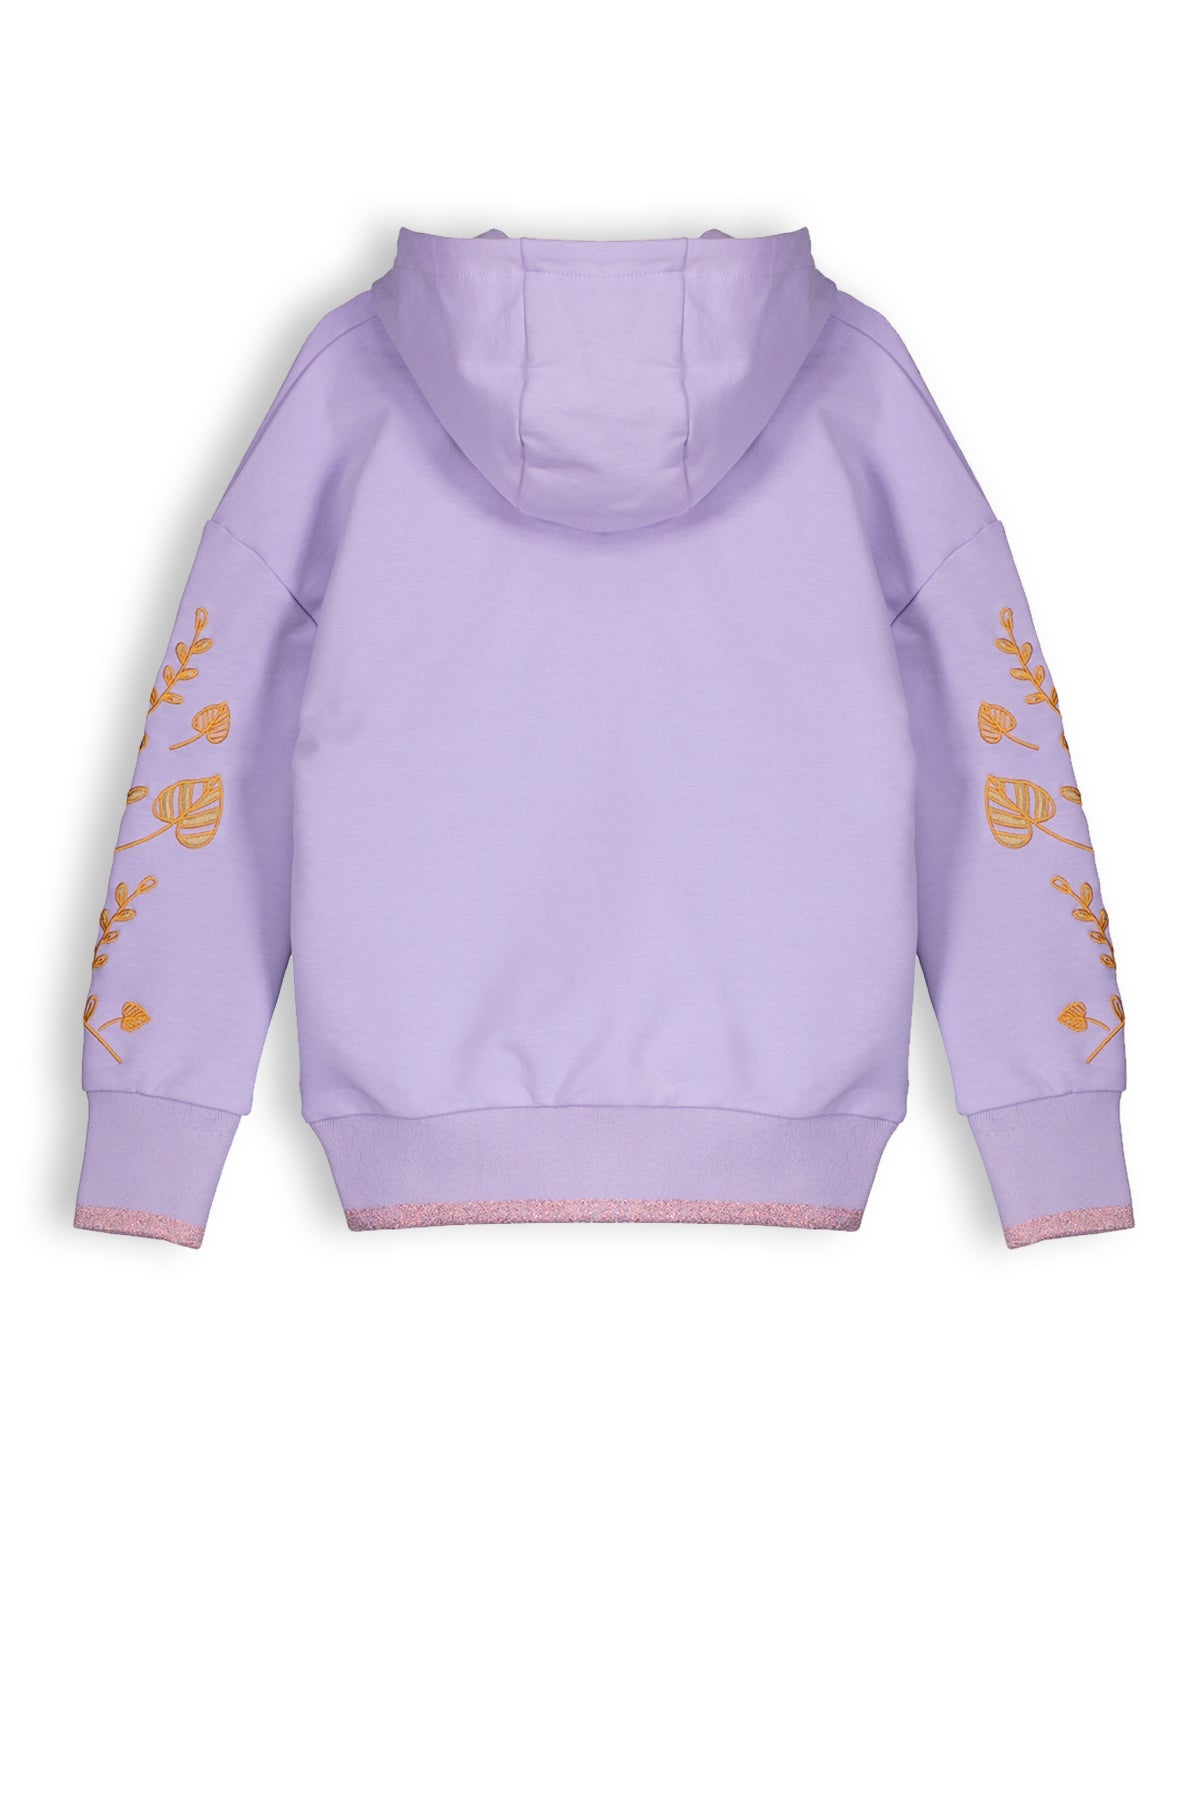 Meisjes Kumy girls hooded sweater van NoNo in de kleur Galaxy Lilac in maat 134-140.